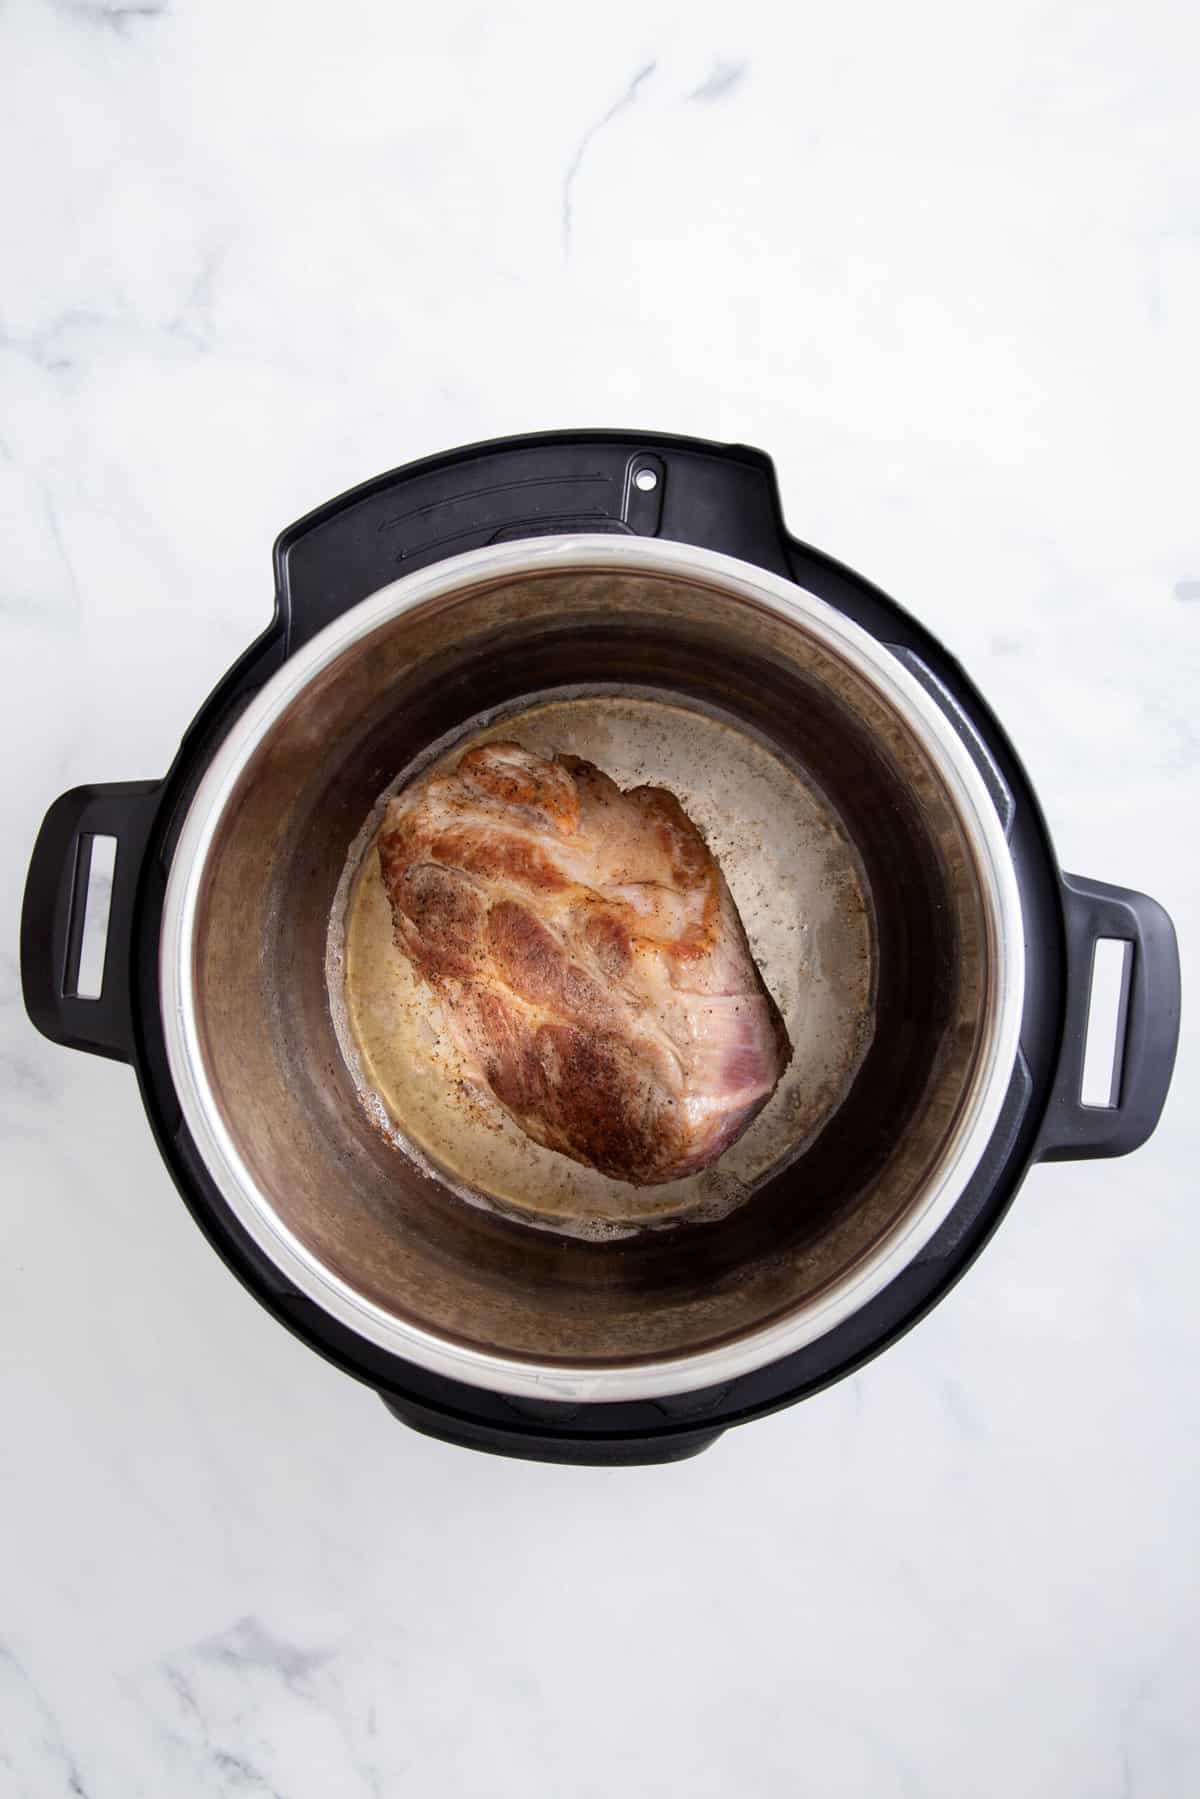 step 1 to make instant pot pork roast, sear the pork in the instant pot